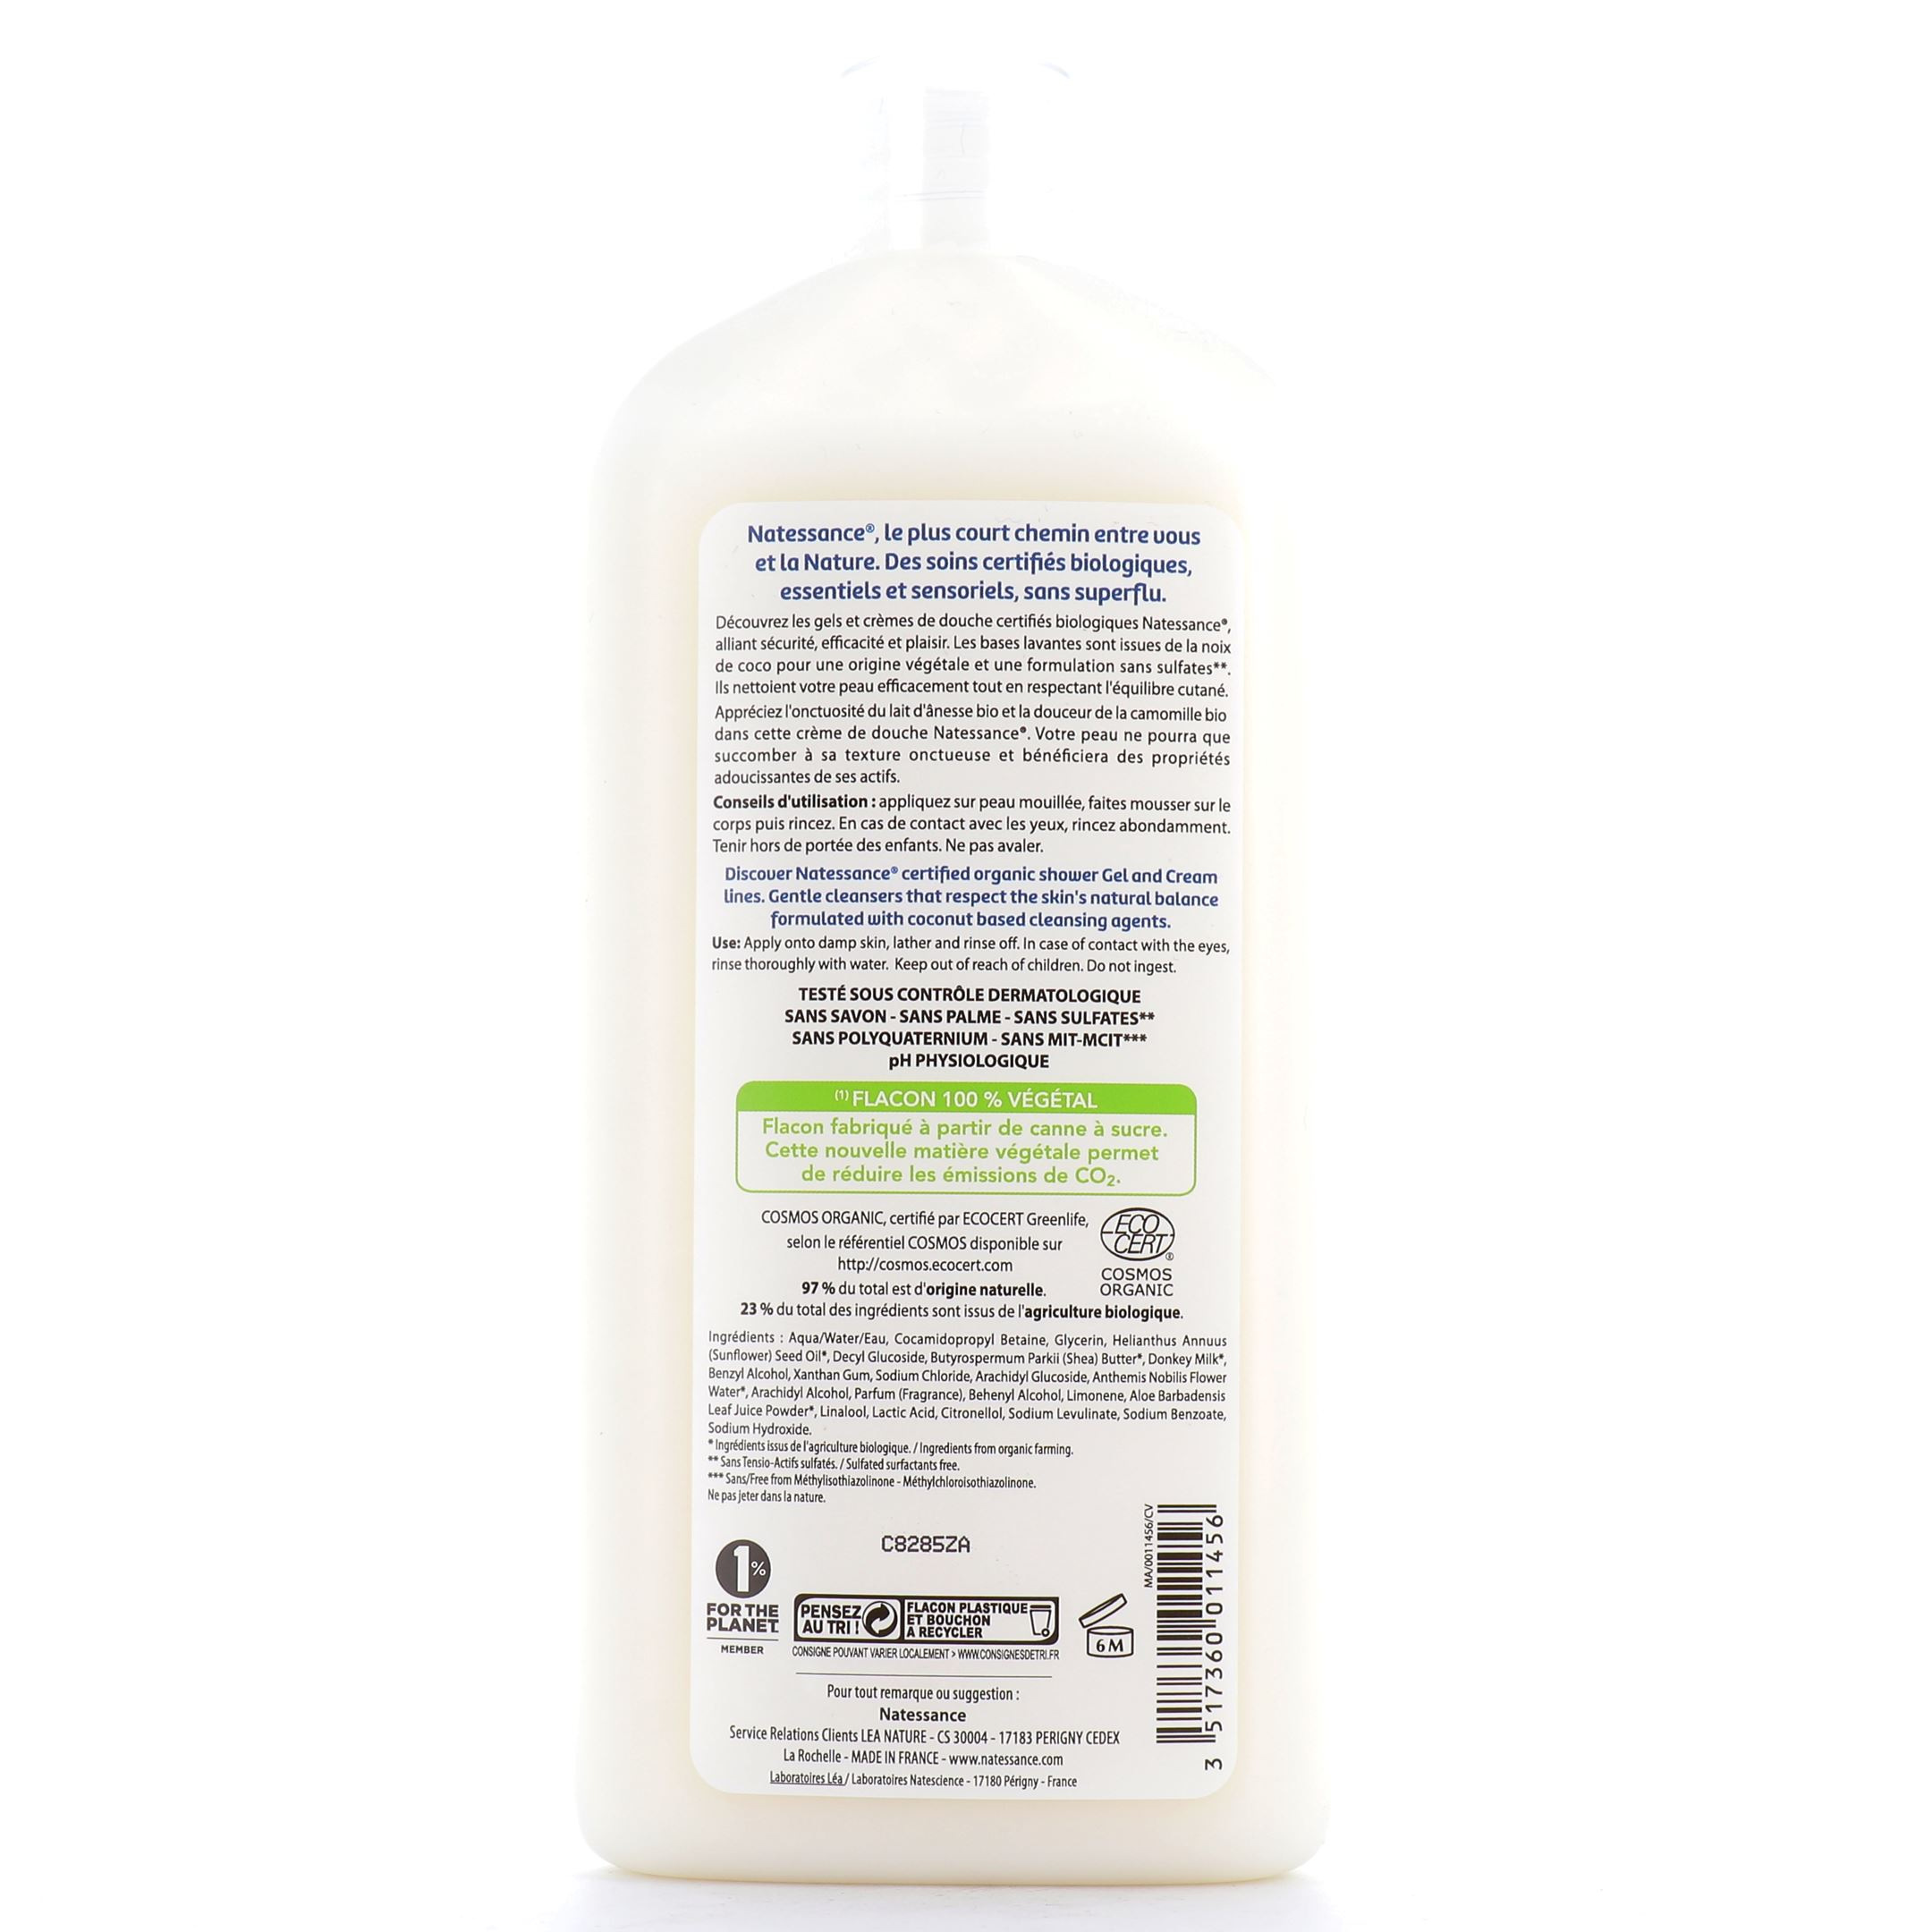 Natessance Hygiène Douche Creamy Milk Camomile without Sulphates - Organic  - 500 ml